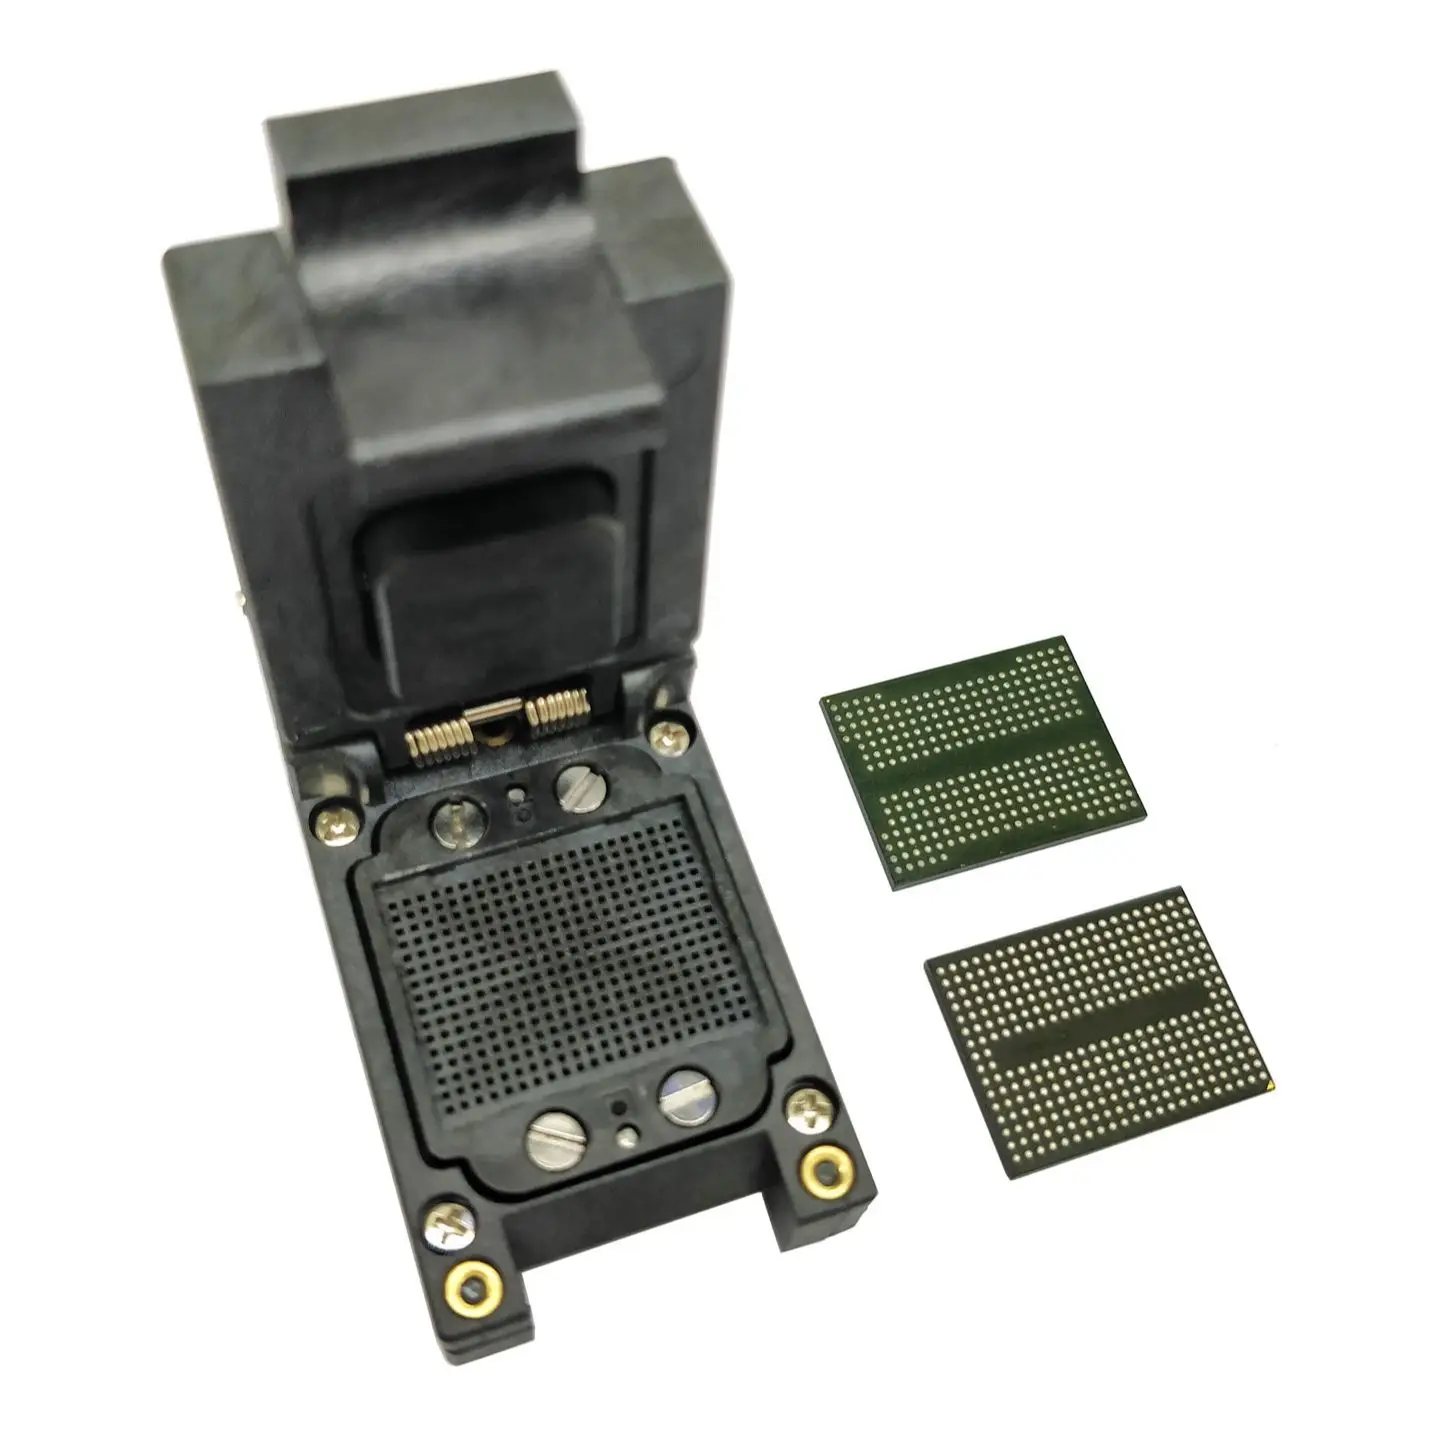 

BGA 272 BGA 316 Programmer Adapter Socket 0.8mm IC PIN PITCH Prise Size 14X18mm High frequency signal Test Conversion Burner